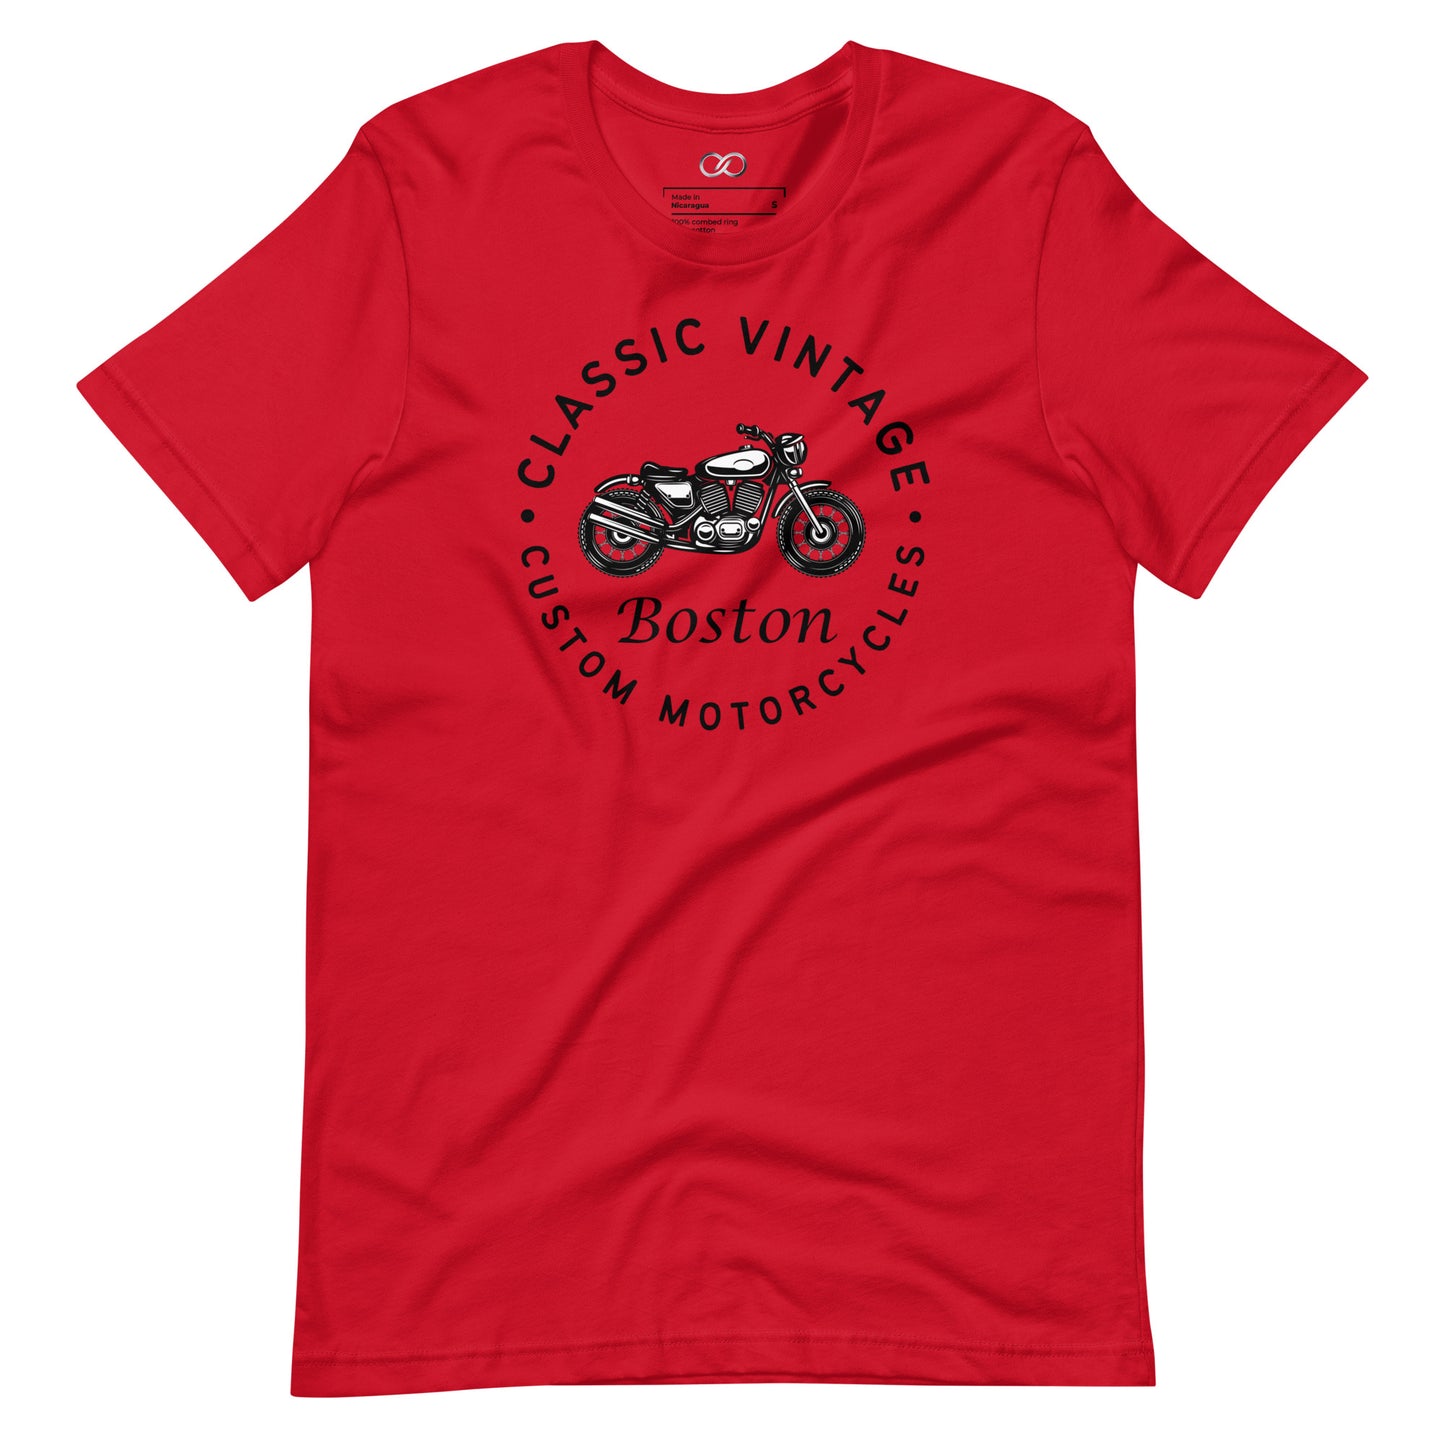 Vintage Motorcycles Tee - Retro Biker Graphic T-Shirt